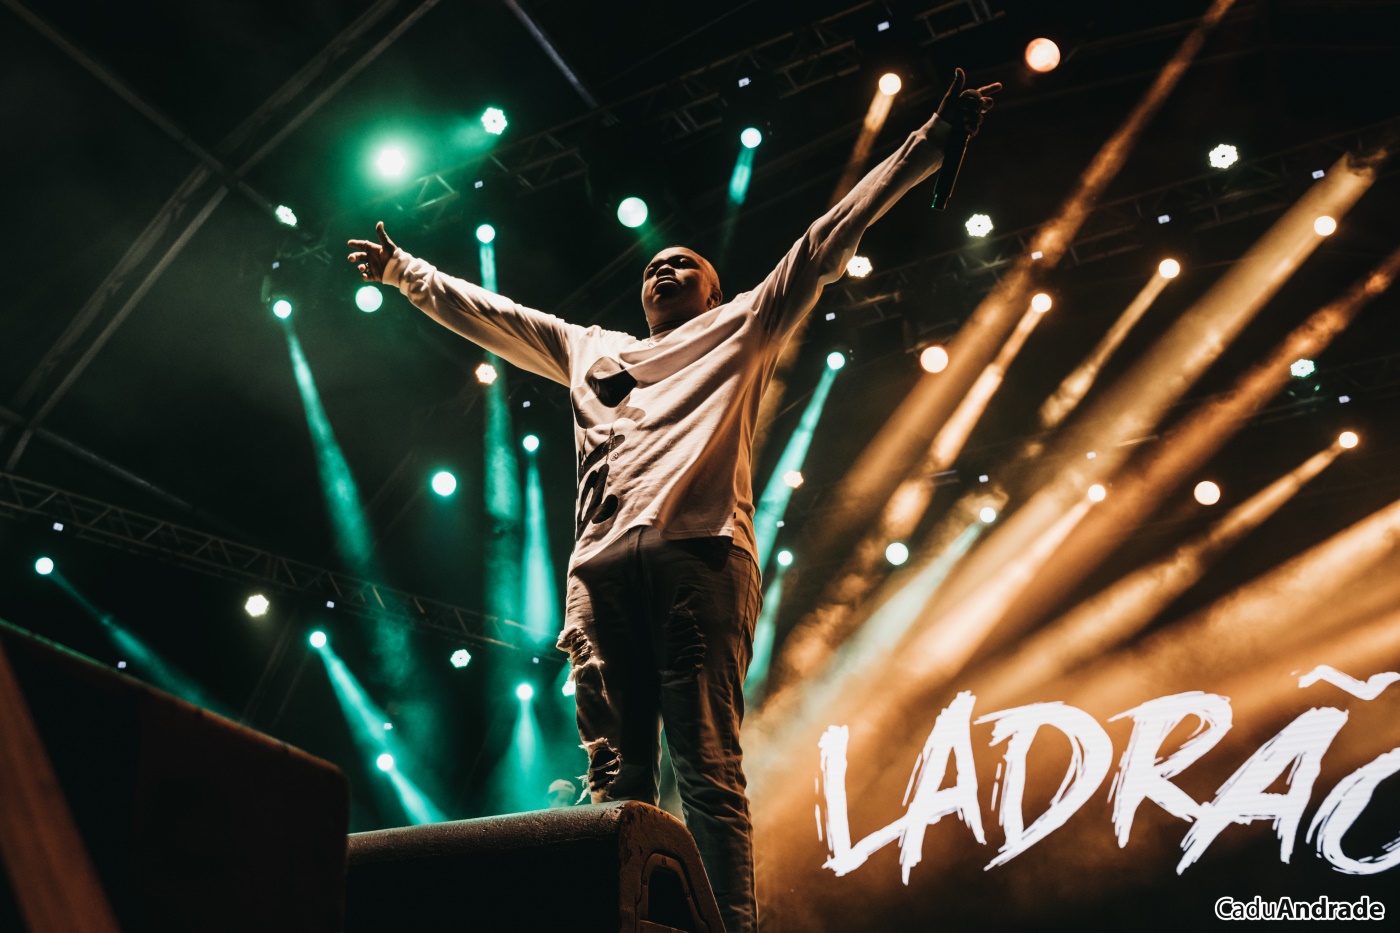 Dois importantes nomes do rap internacional confirmados no Lolla 2018